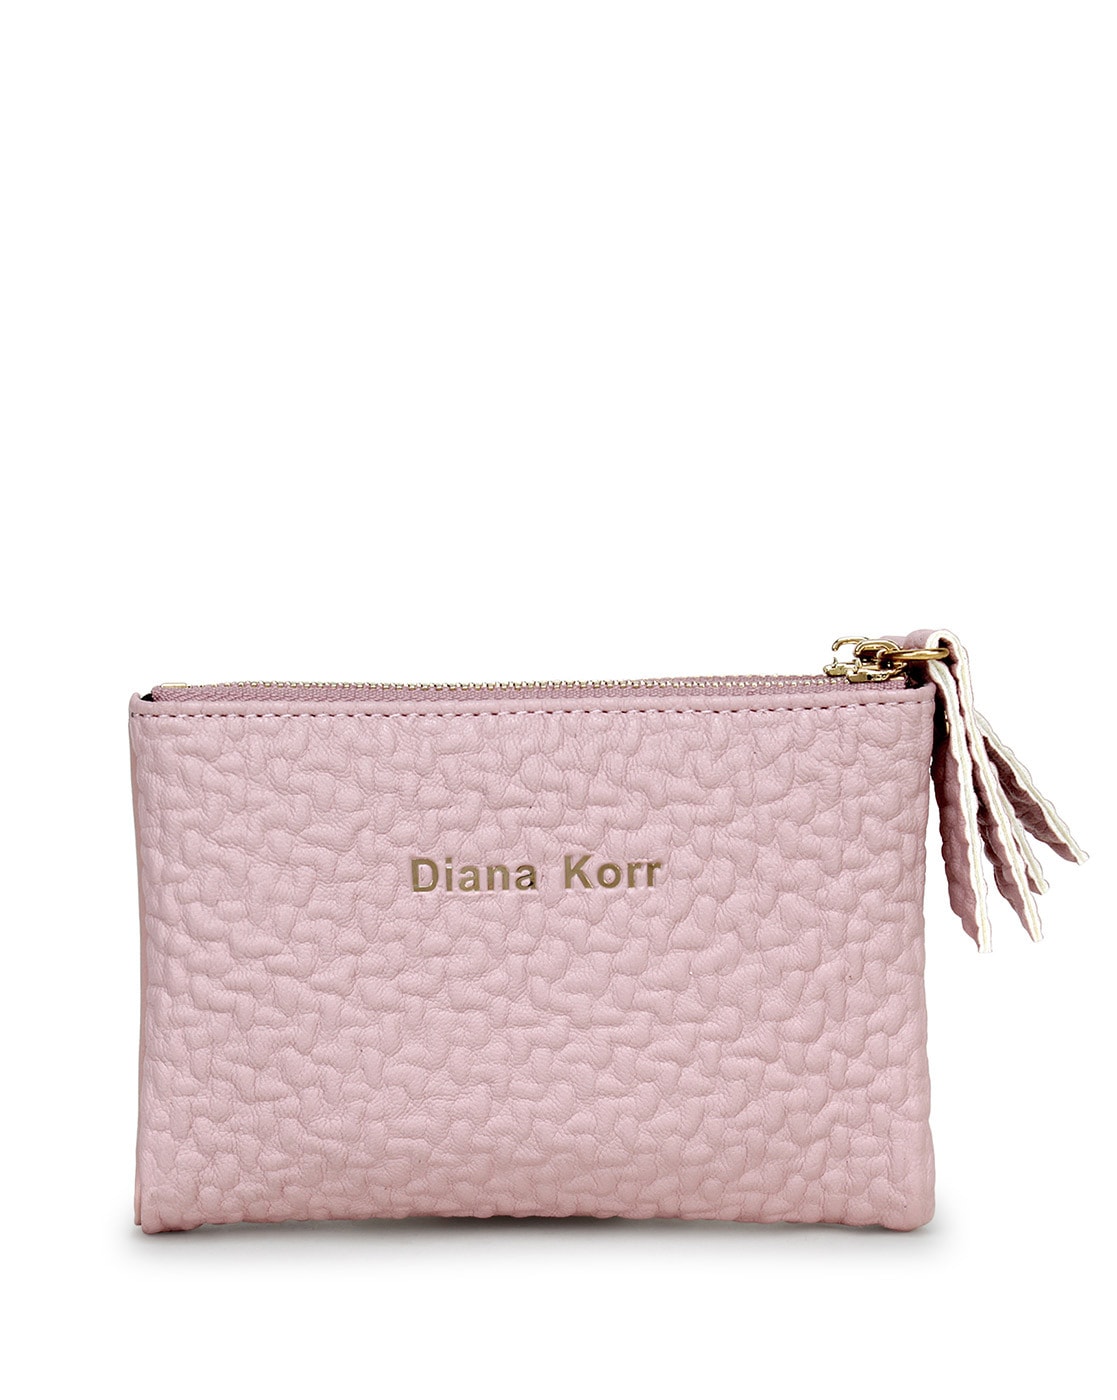 Handbags | Diana korr handbag | Freeup